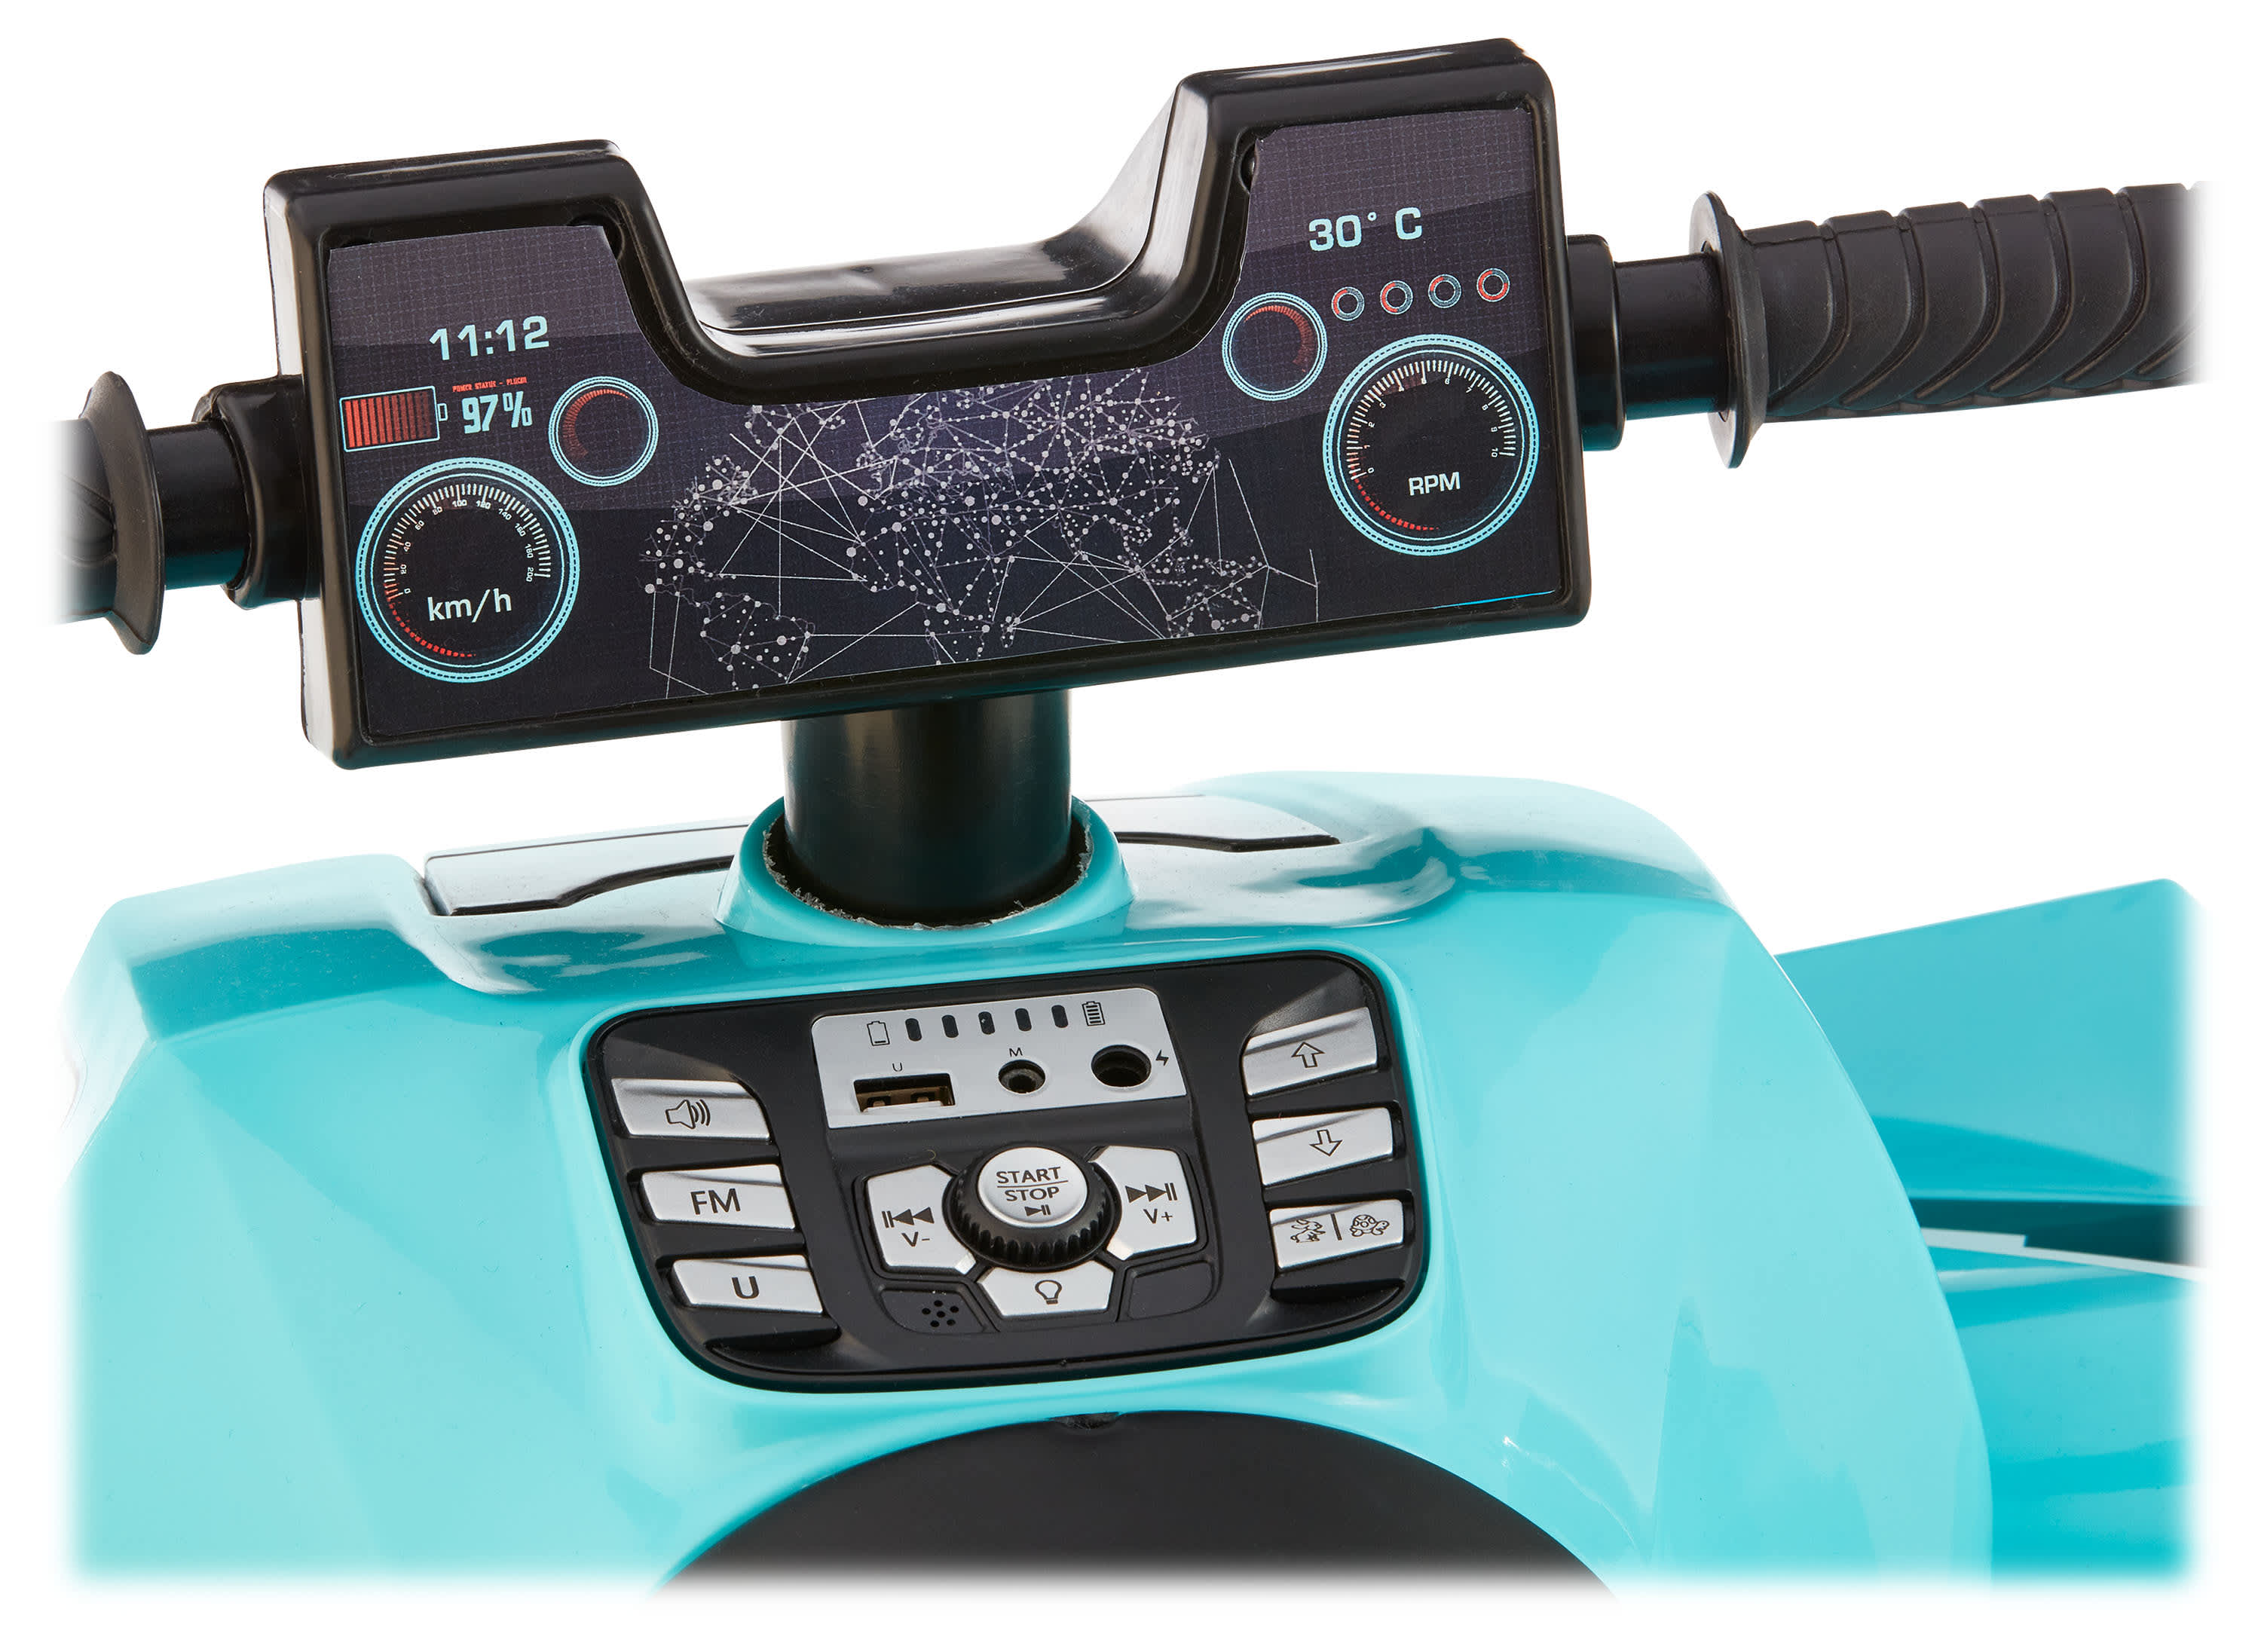 Bass Pro Shops® 12V Tracker® ATV Battery Ride-On Toy for Kids - Turquoise